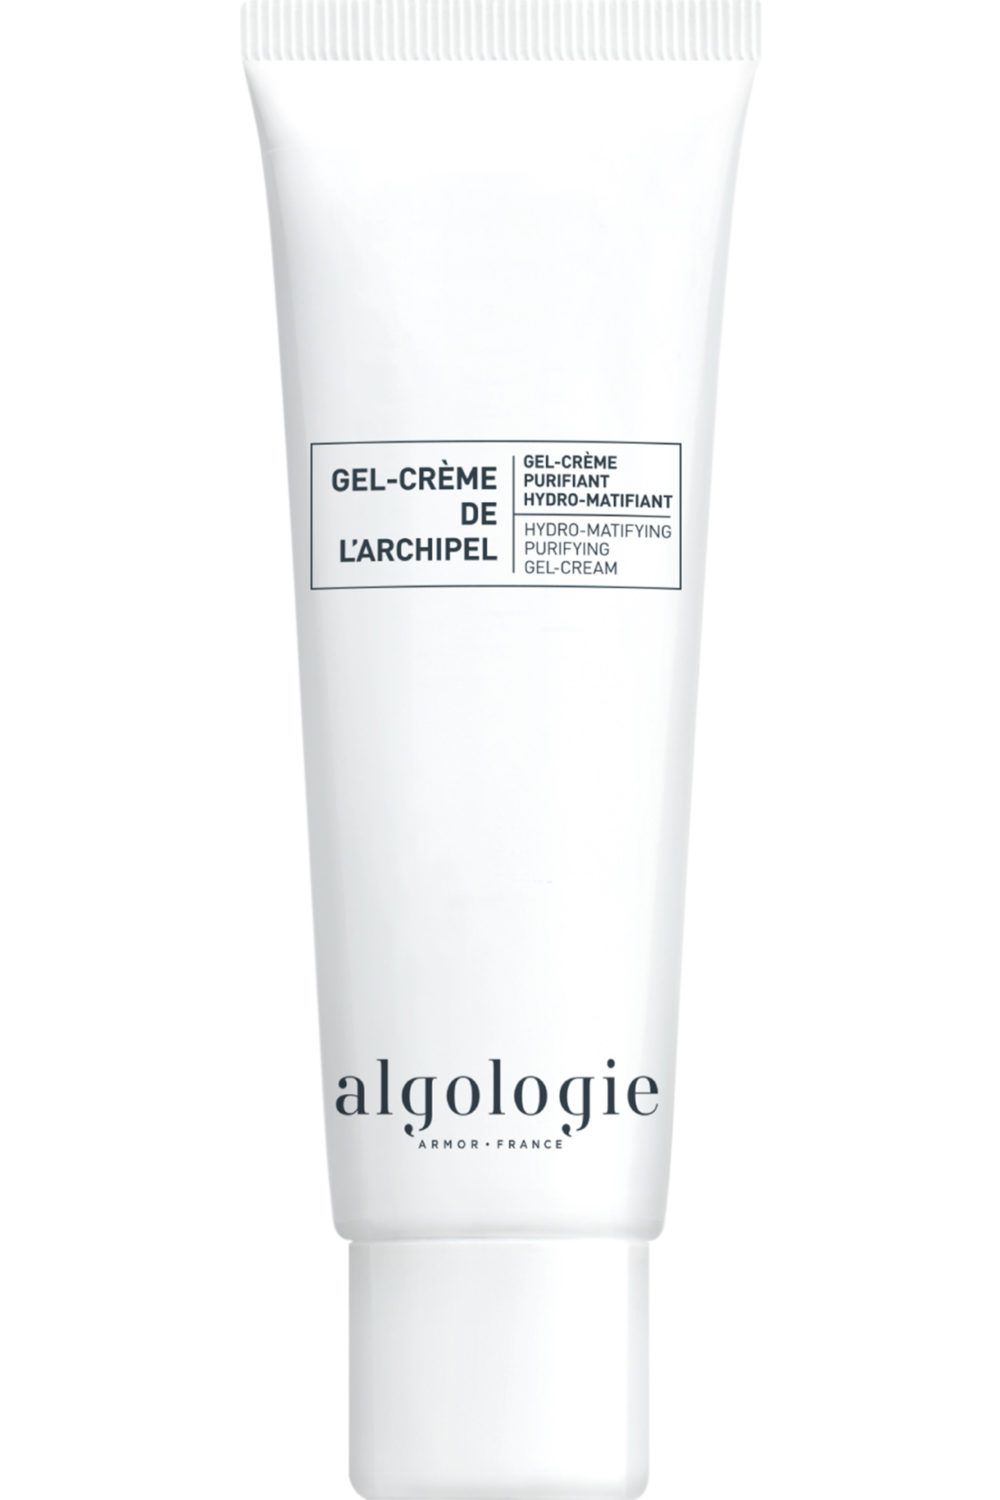 Algologie - Gel-crème purifiant hydro-matifiant